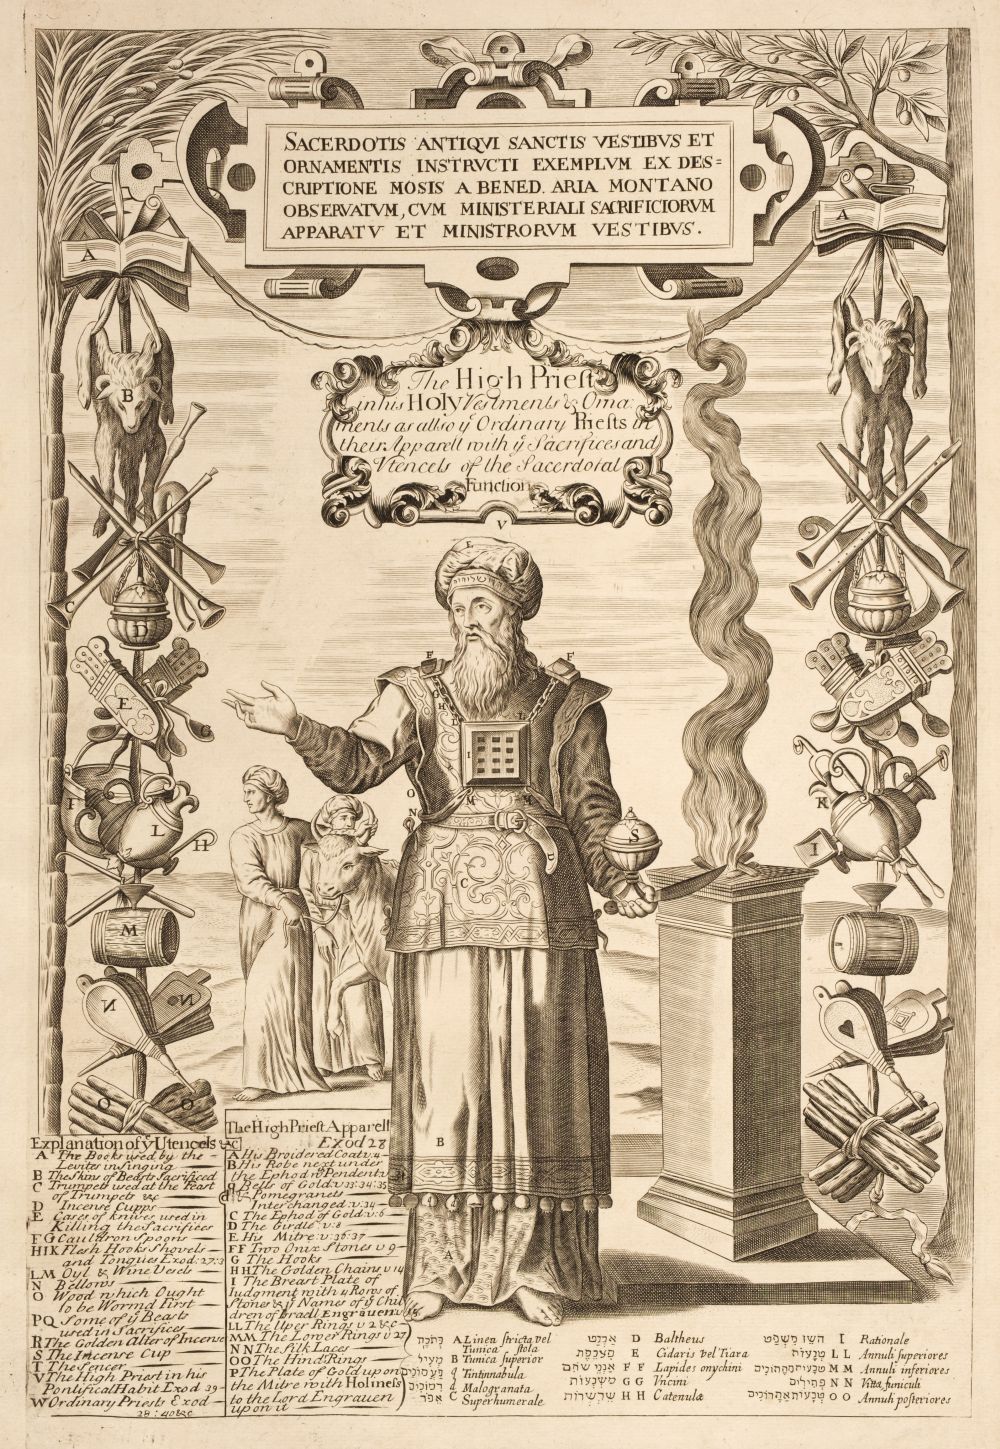 Bowles (Thomas). Geographia sacra illustrata, 1st edition, 1728, one copy on ESTC